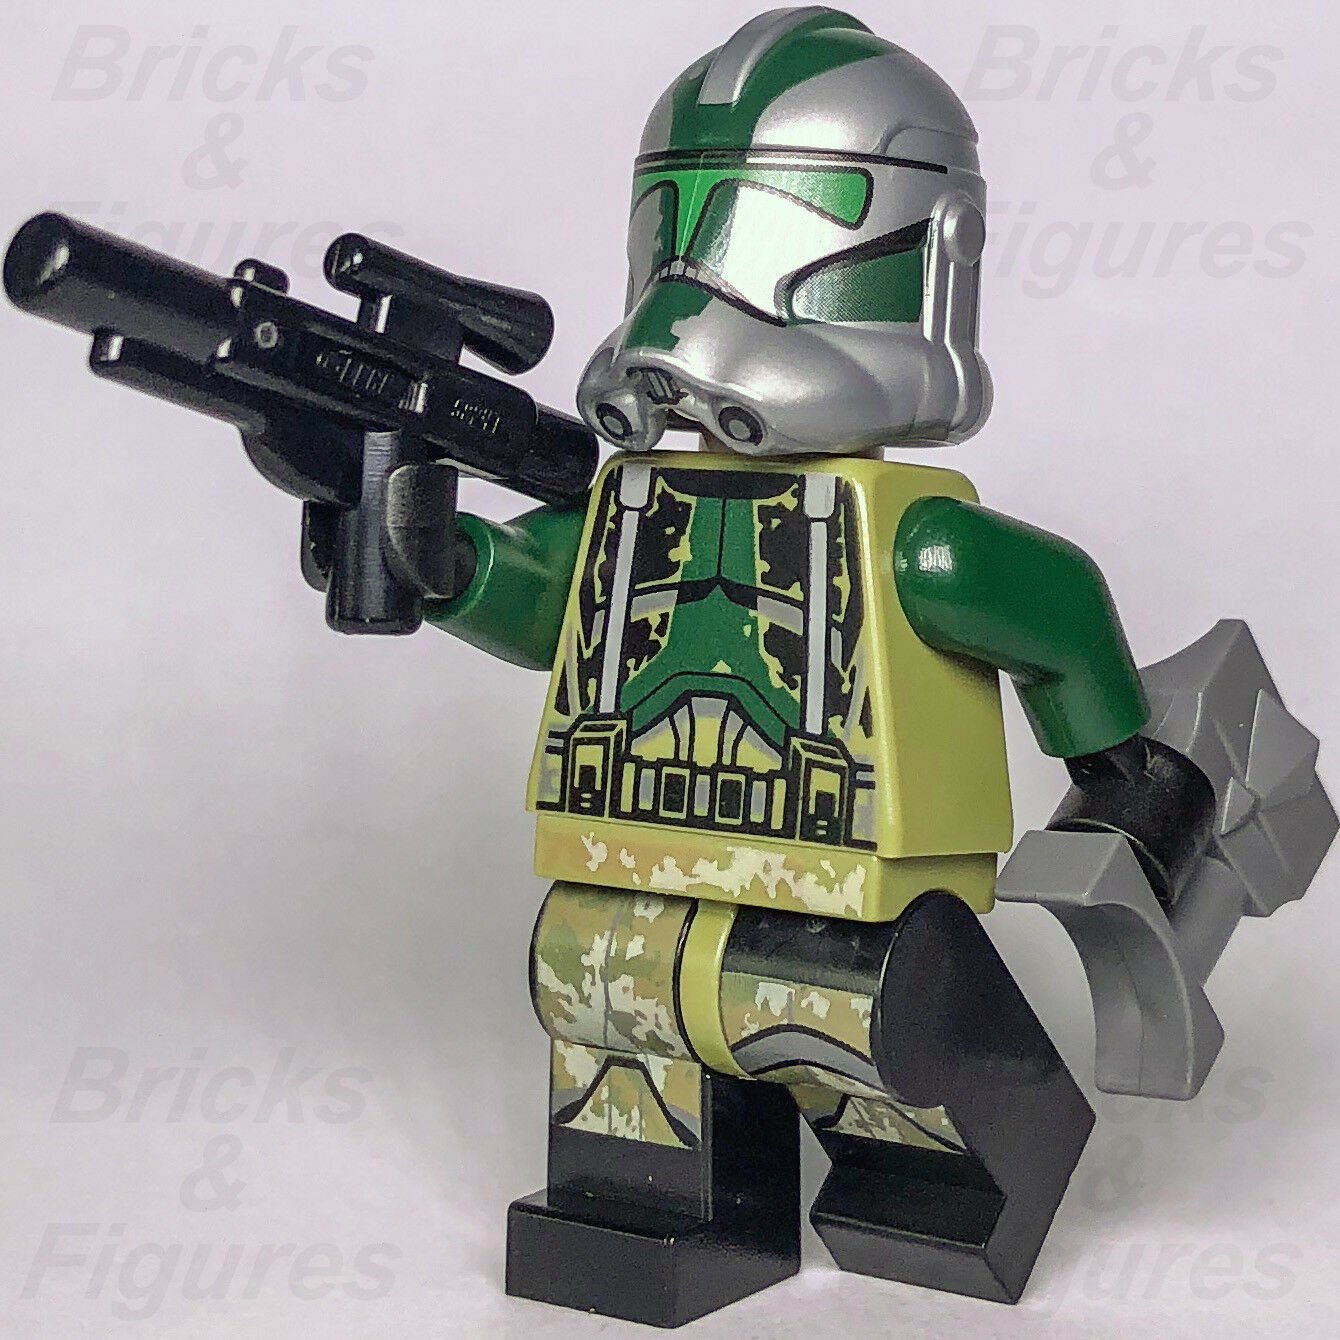 New Star Wars LEGO Commander Gree Kashyyyk Clone Trooper Minifigure 75043 75151 - Bricks & Figures